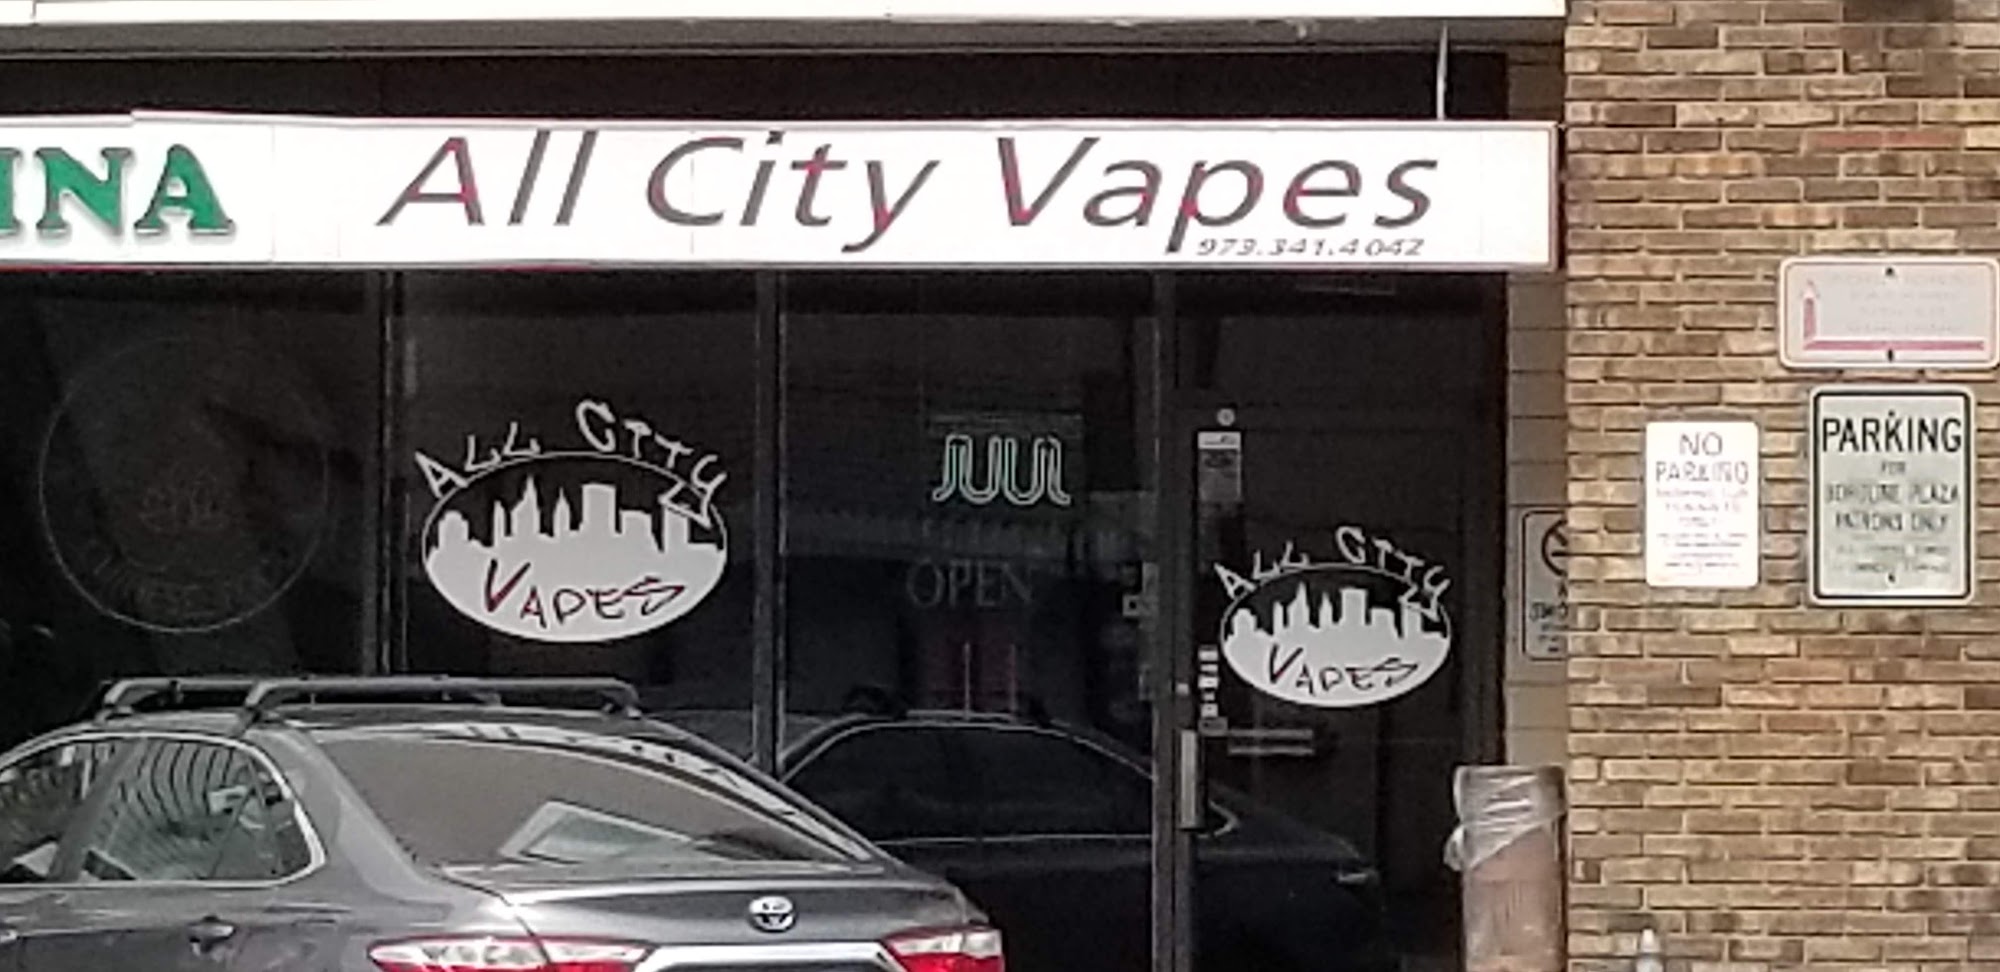 All City Vapes